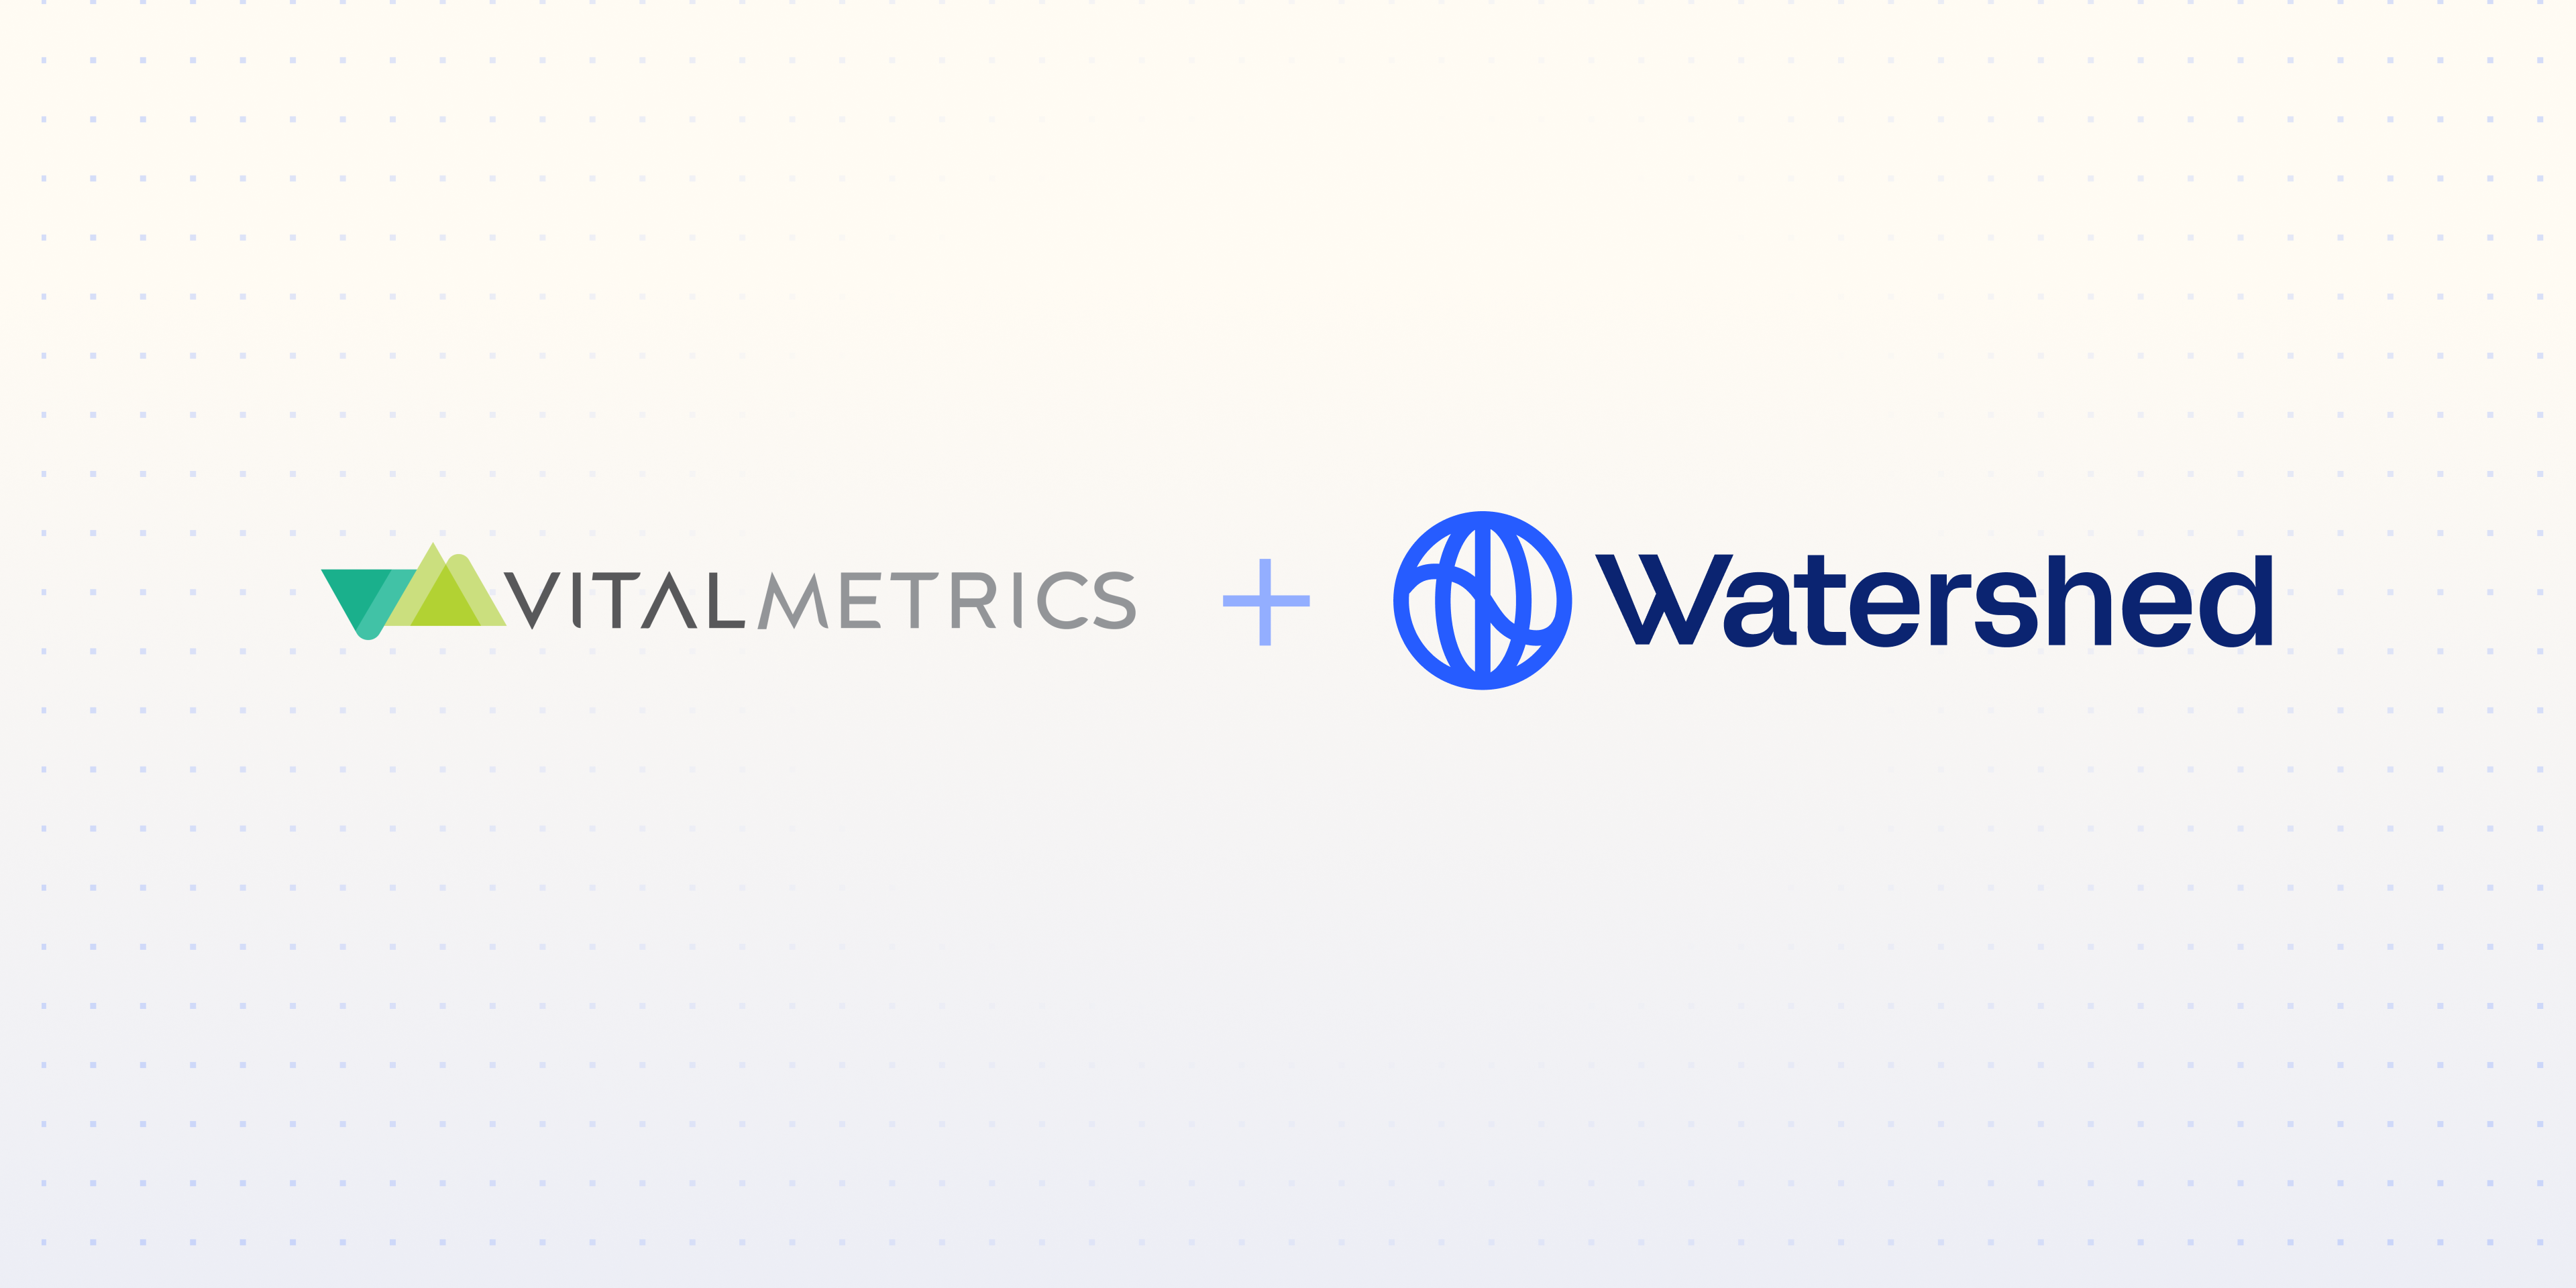 vitalmetrics logo + watershed logo